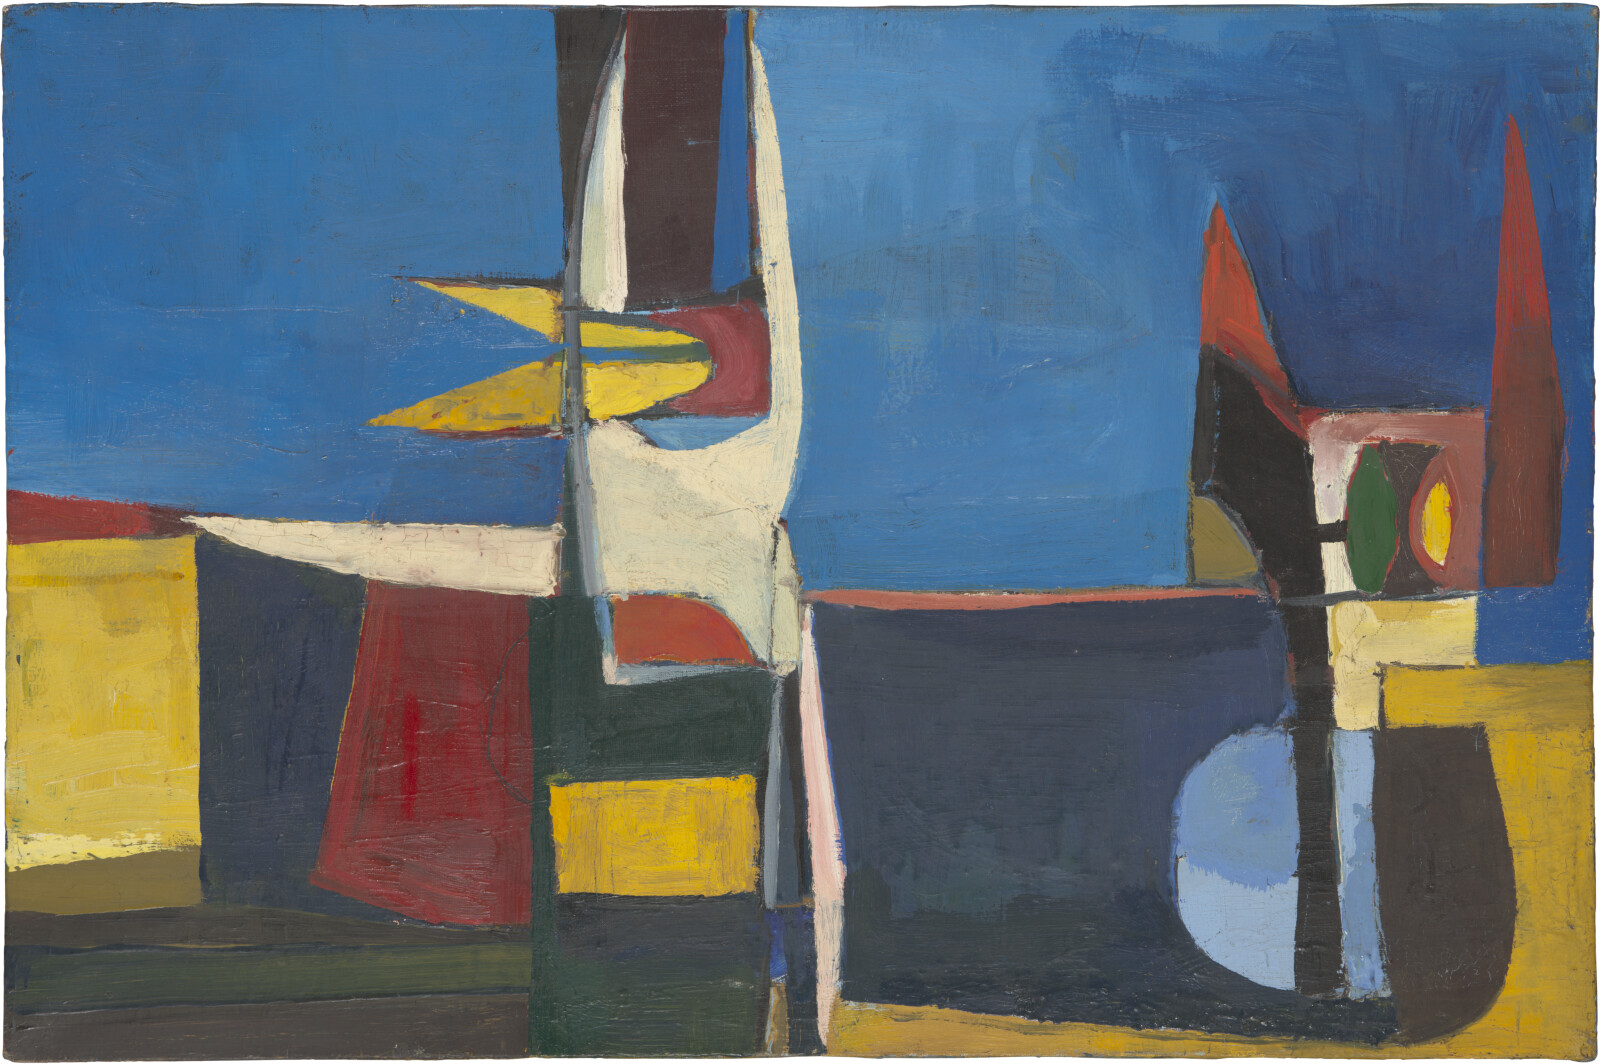 Richard Diebenkorn: Paintings and Works on Paper 1946-1952